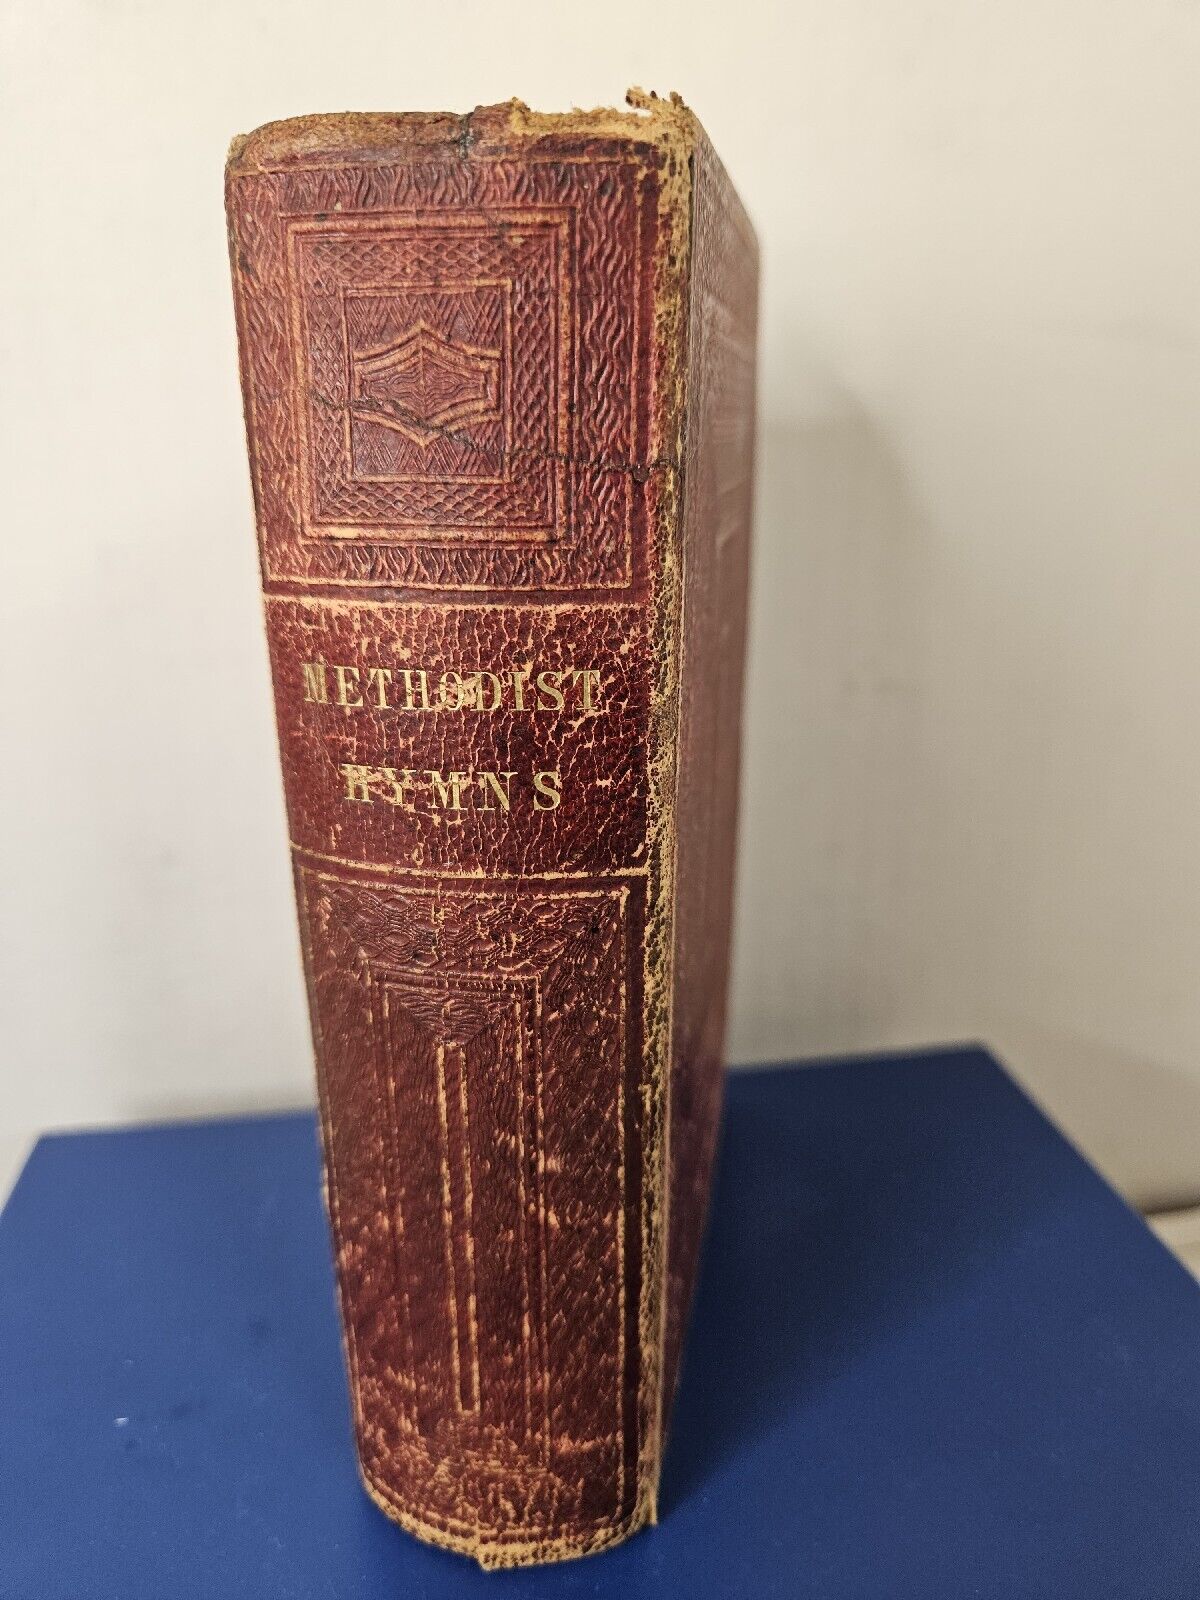 1850 Methodist Hymns - WVB-11